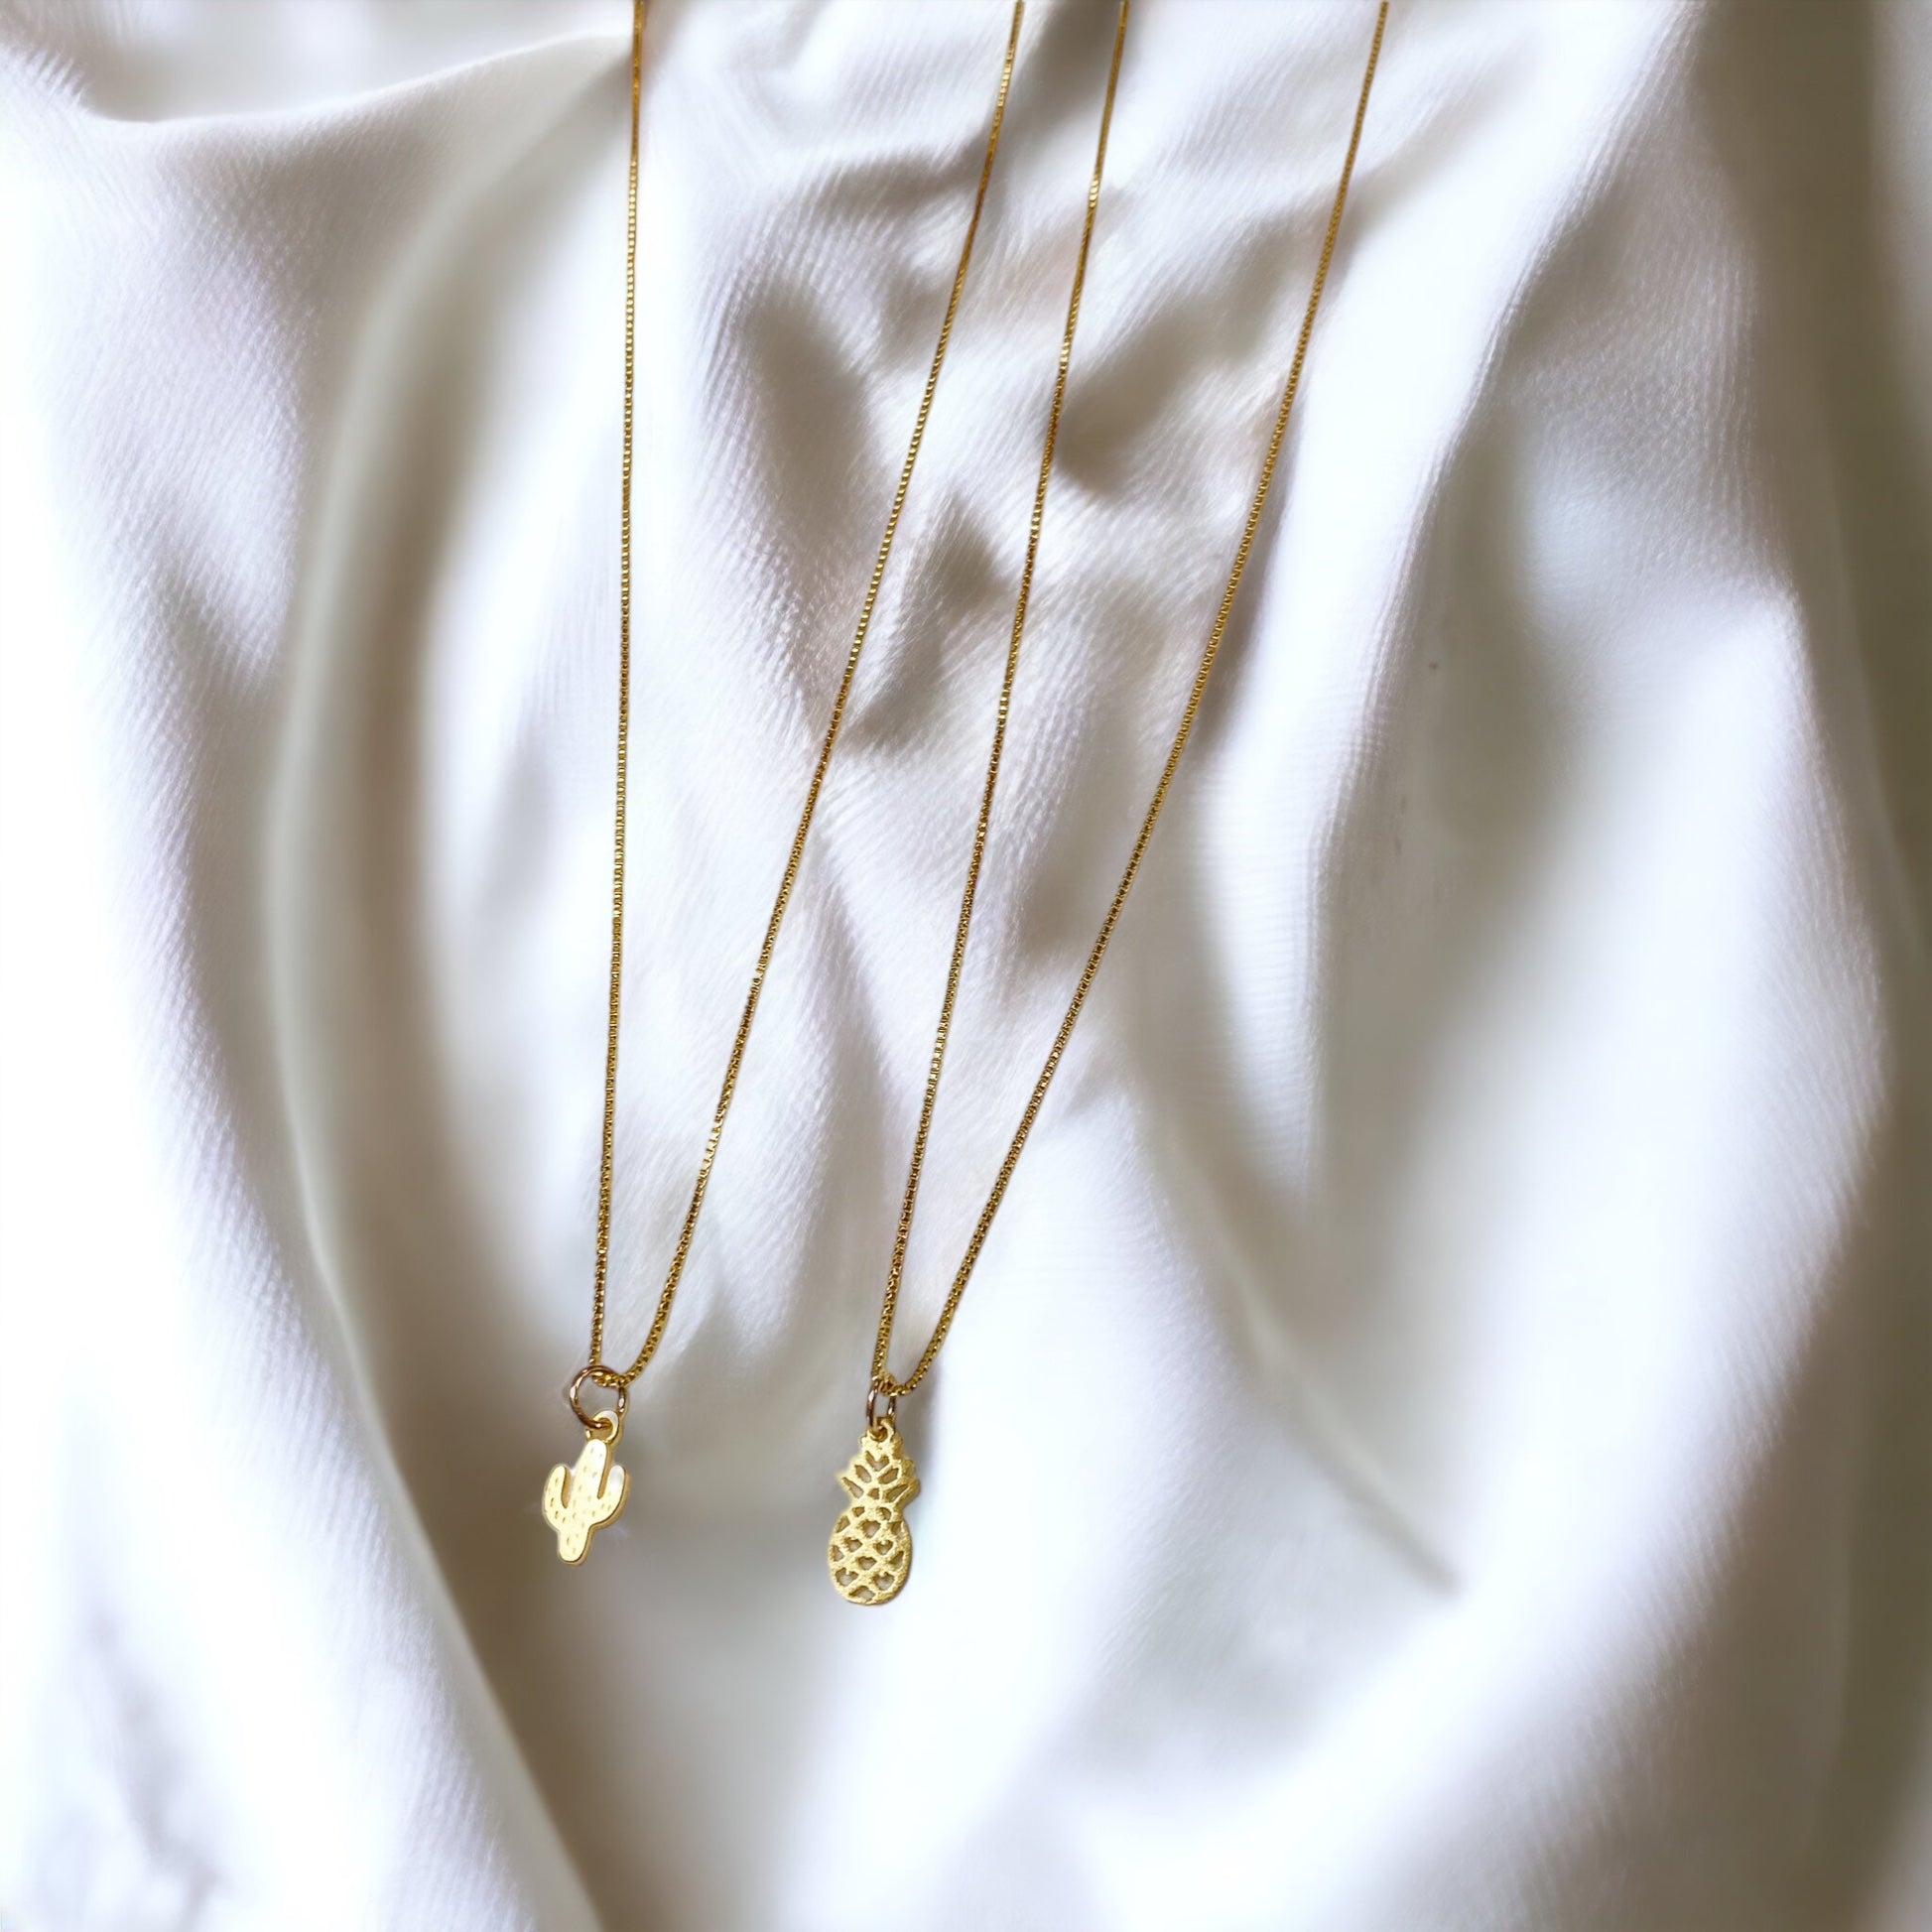 Cactus Necklace - Gold Charm